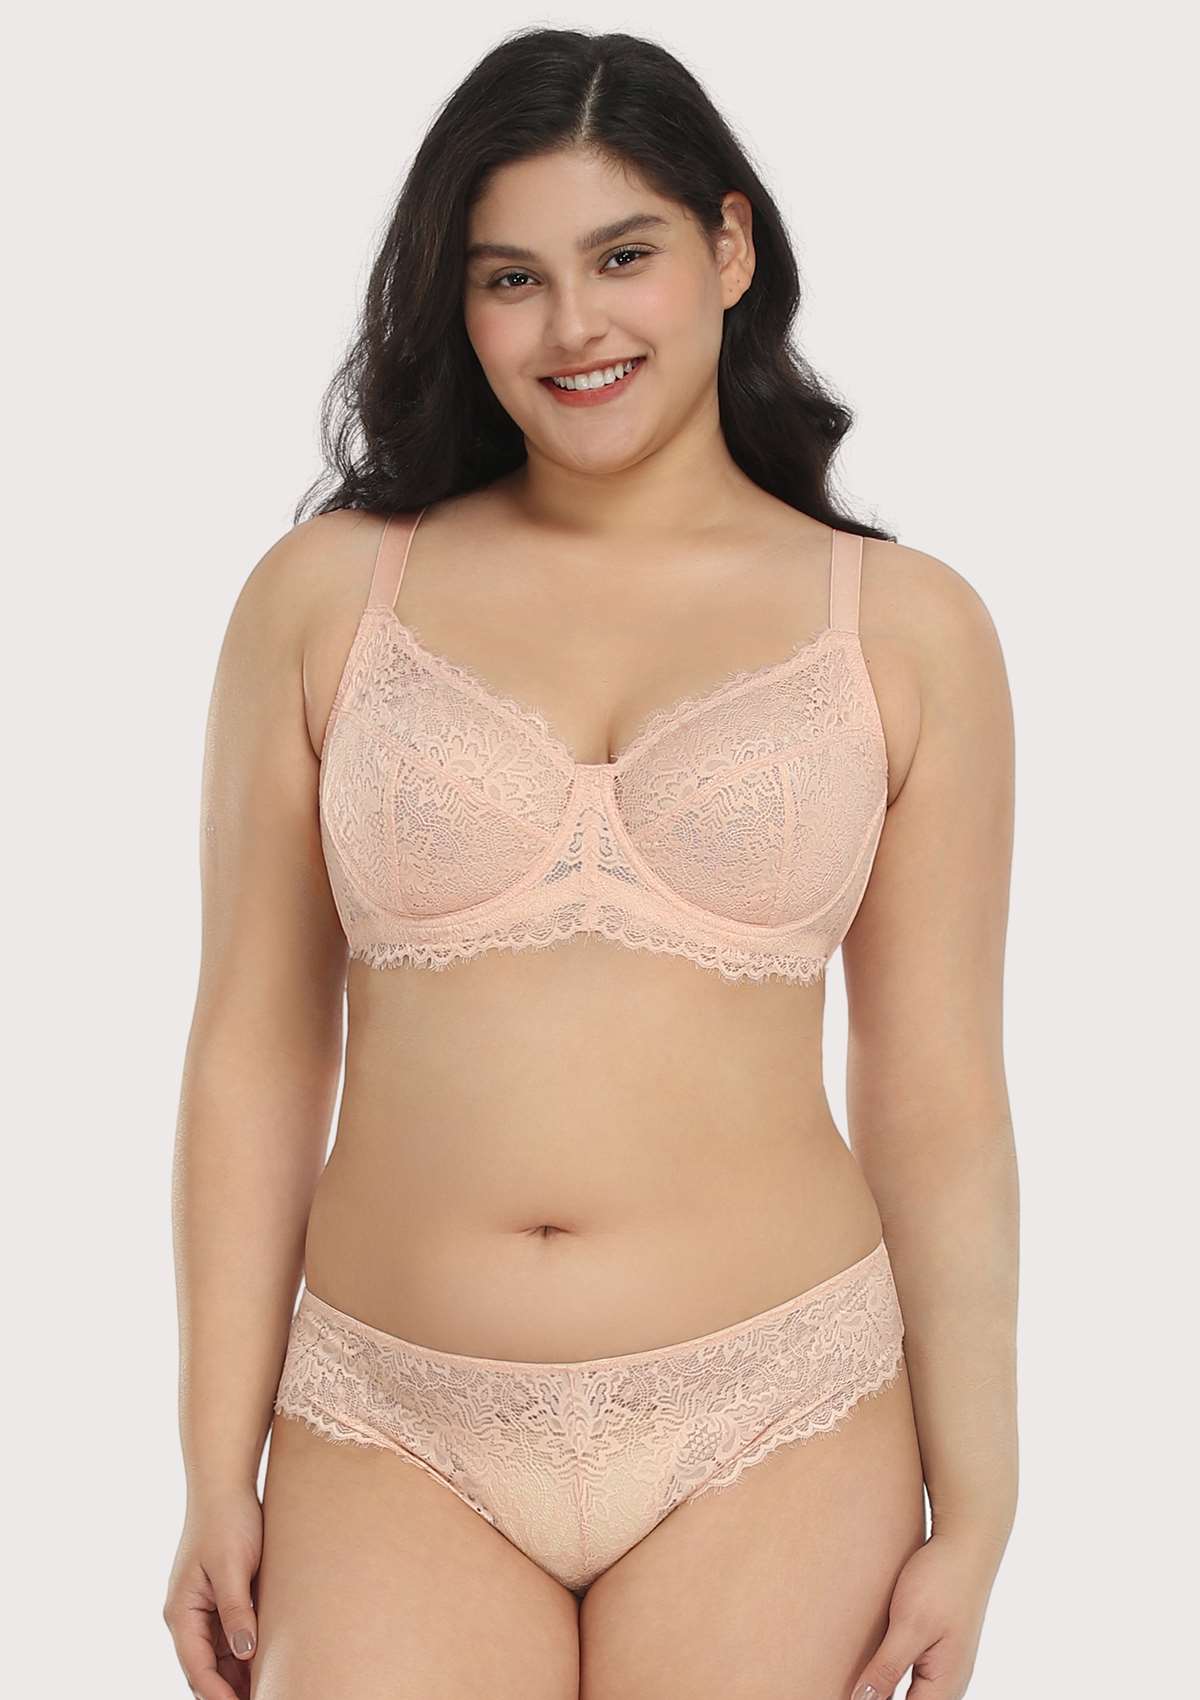 HSIA Sunflower Matching Bra And Panties Set: Comfortable Plus Size Bra - Pink / 46 / C